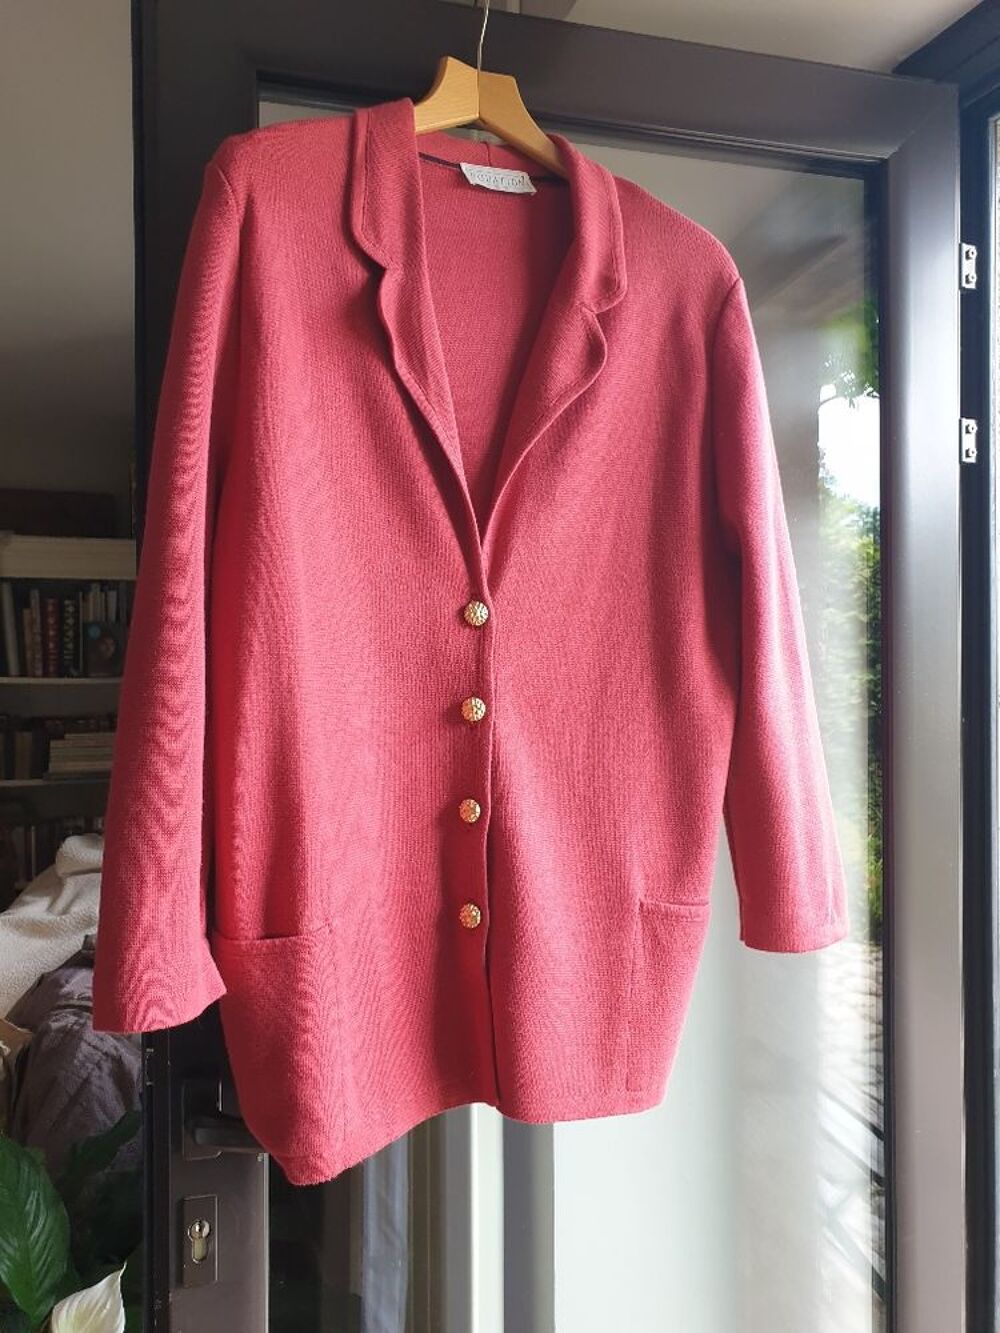 Veste en laine rouge/ros&eacute; et jupe assortis, vintage. Vtements